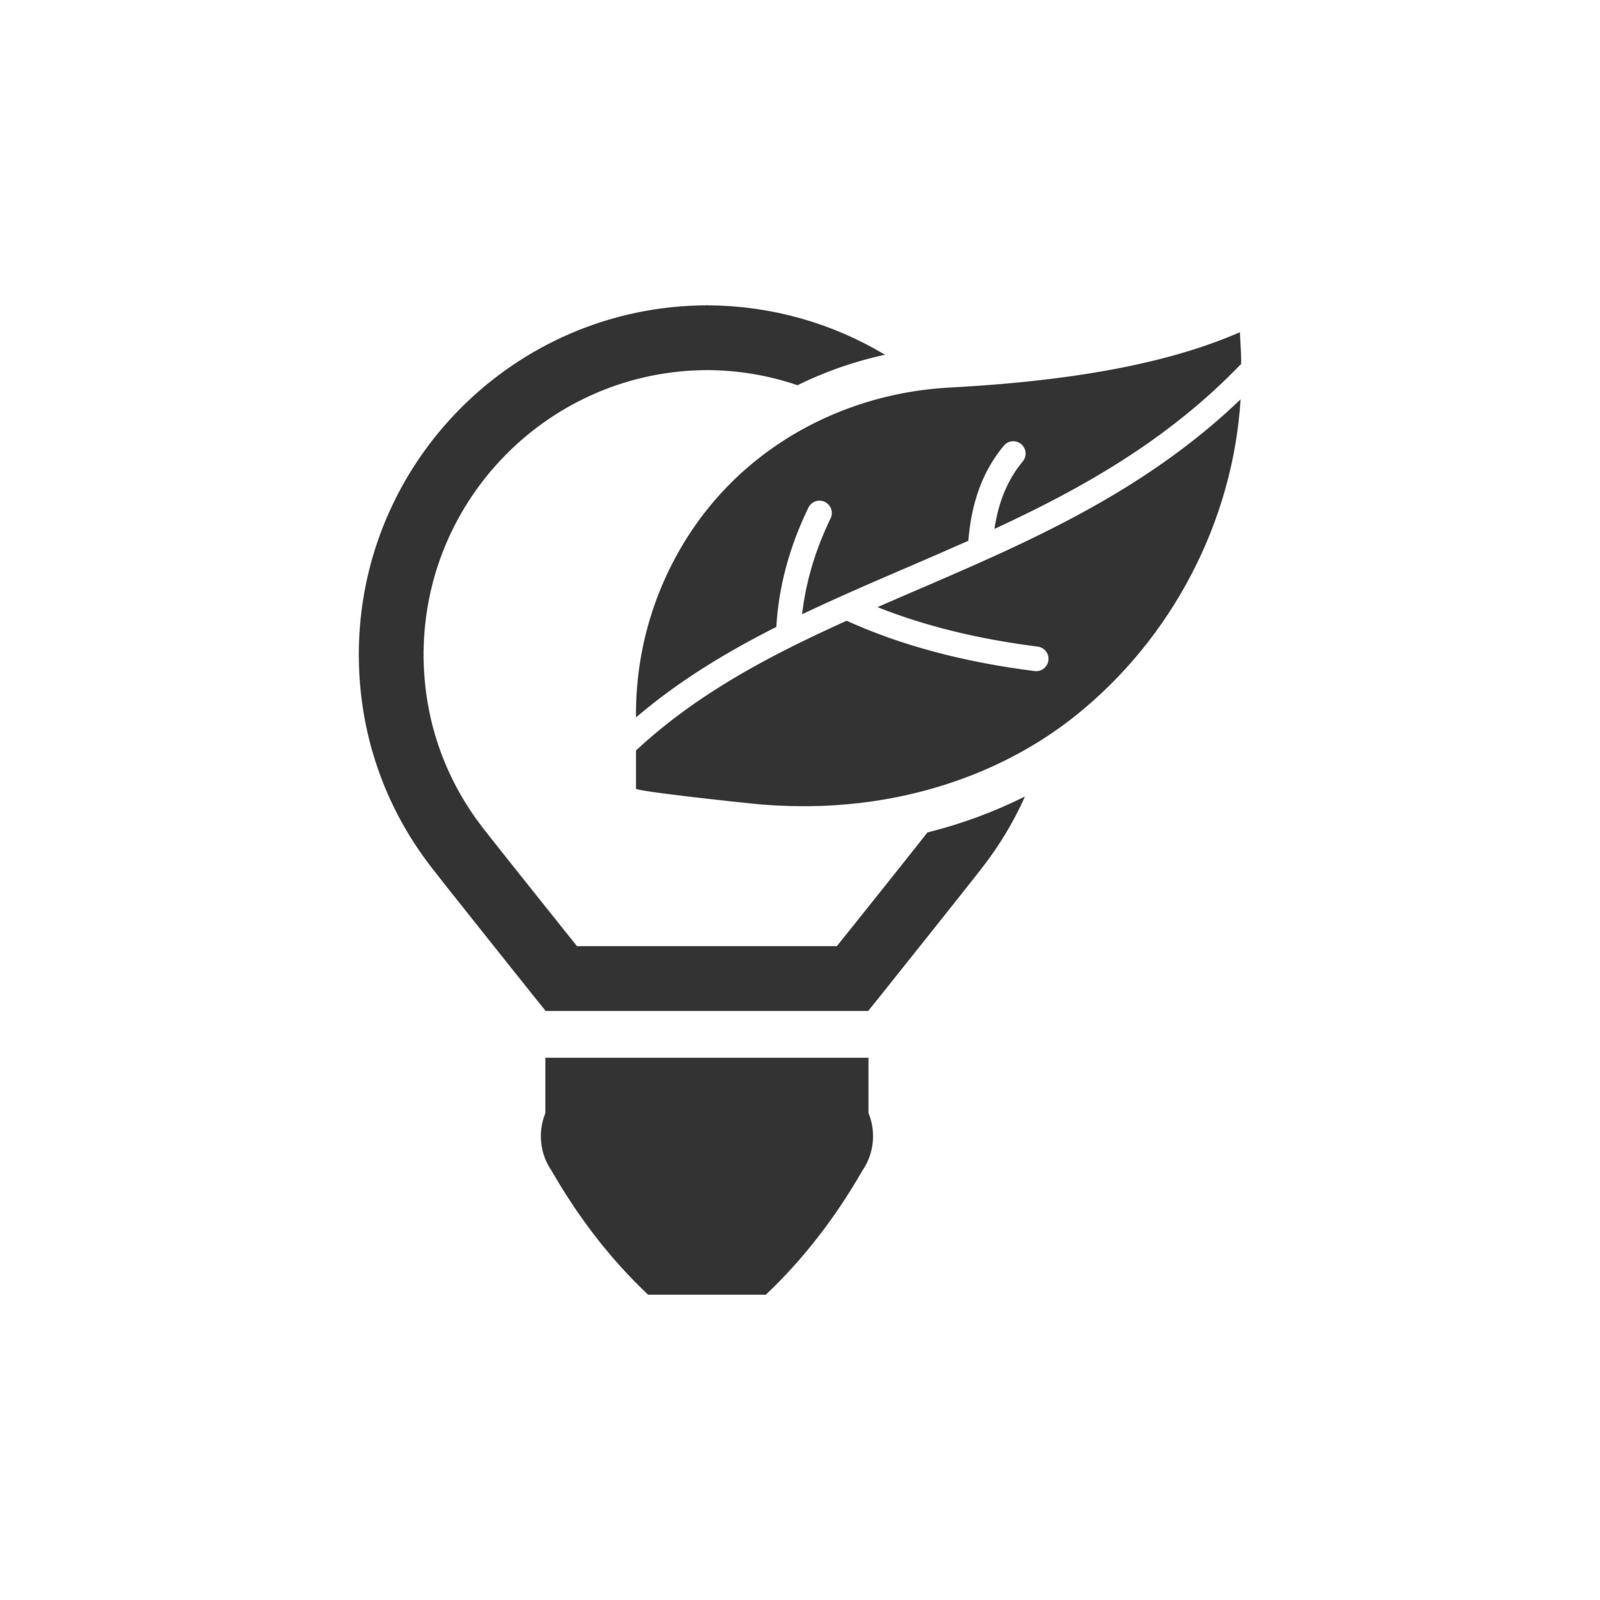 Green energy icon. Vector EPS file. 